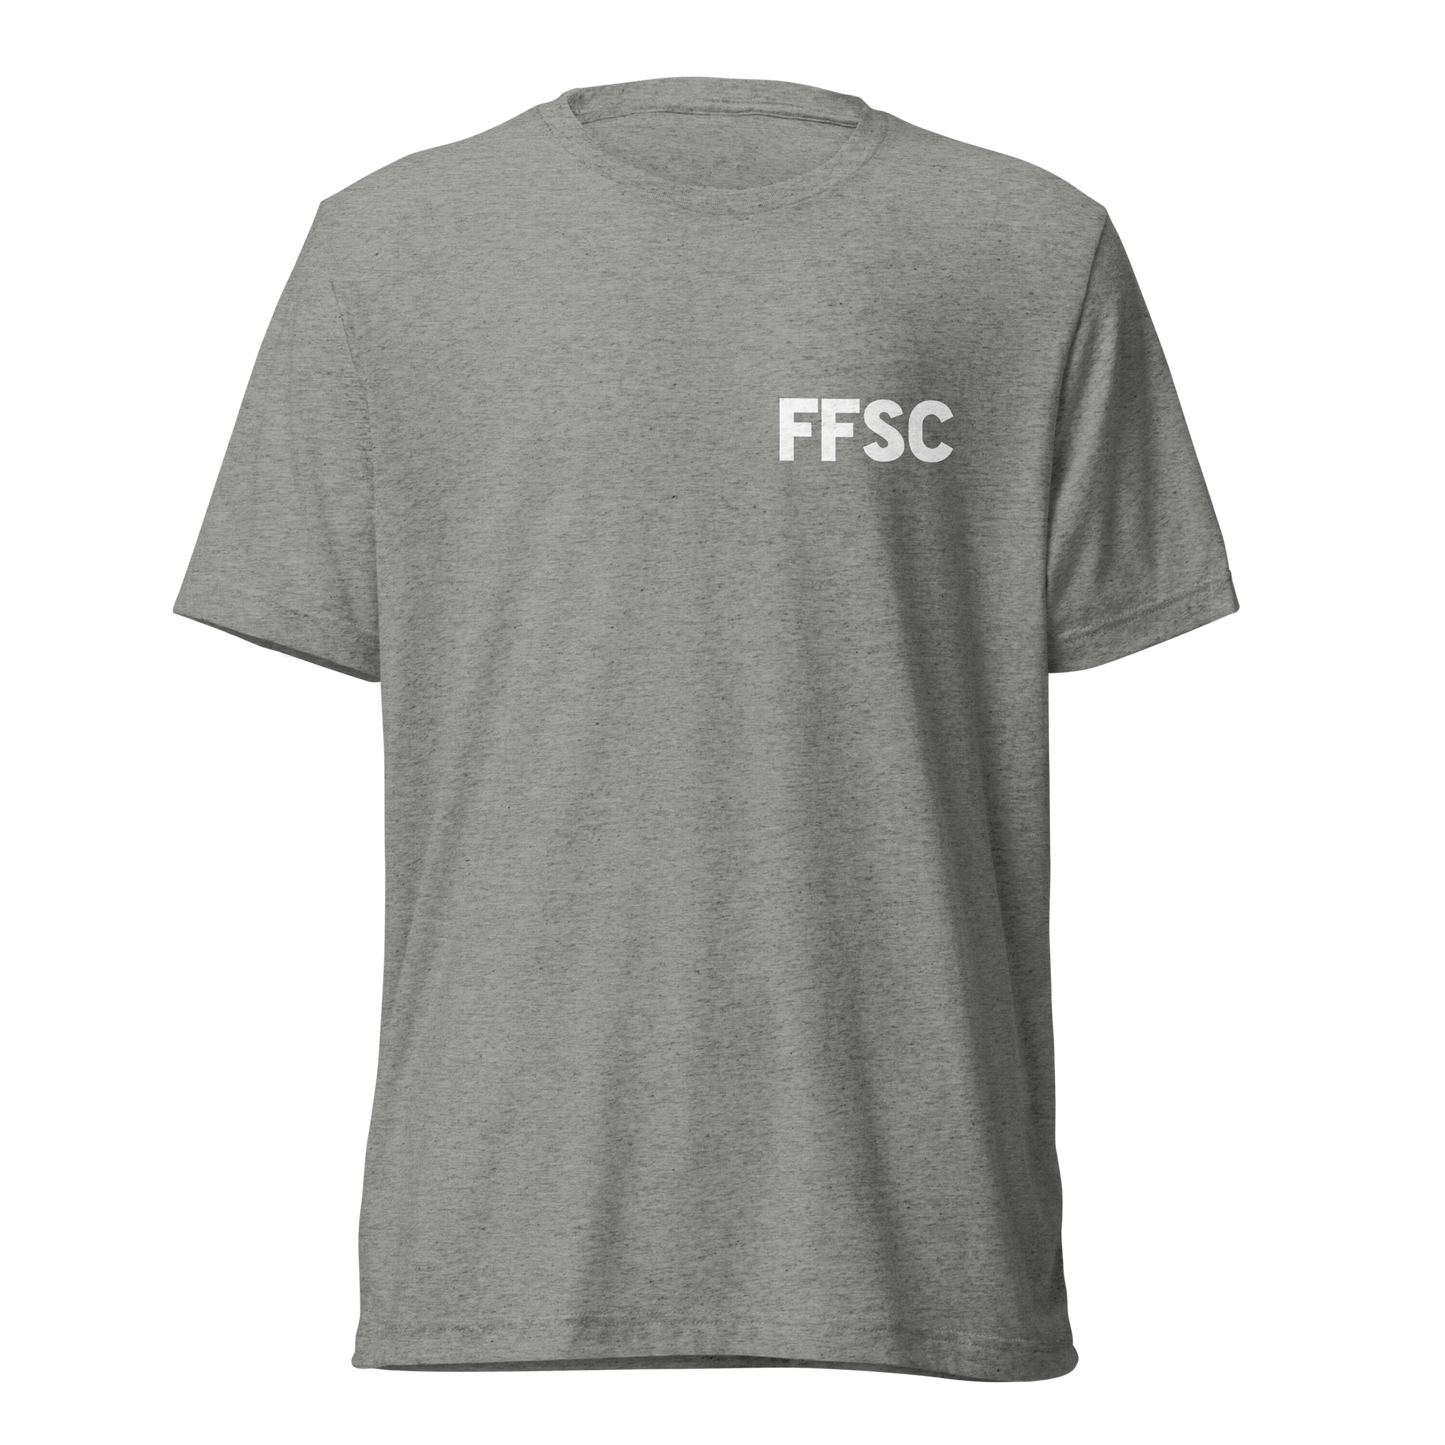 FFSC Super Soft Short sleeve t-shirt with back print